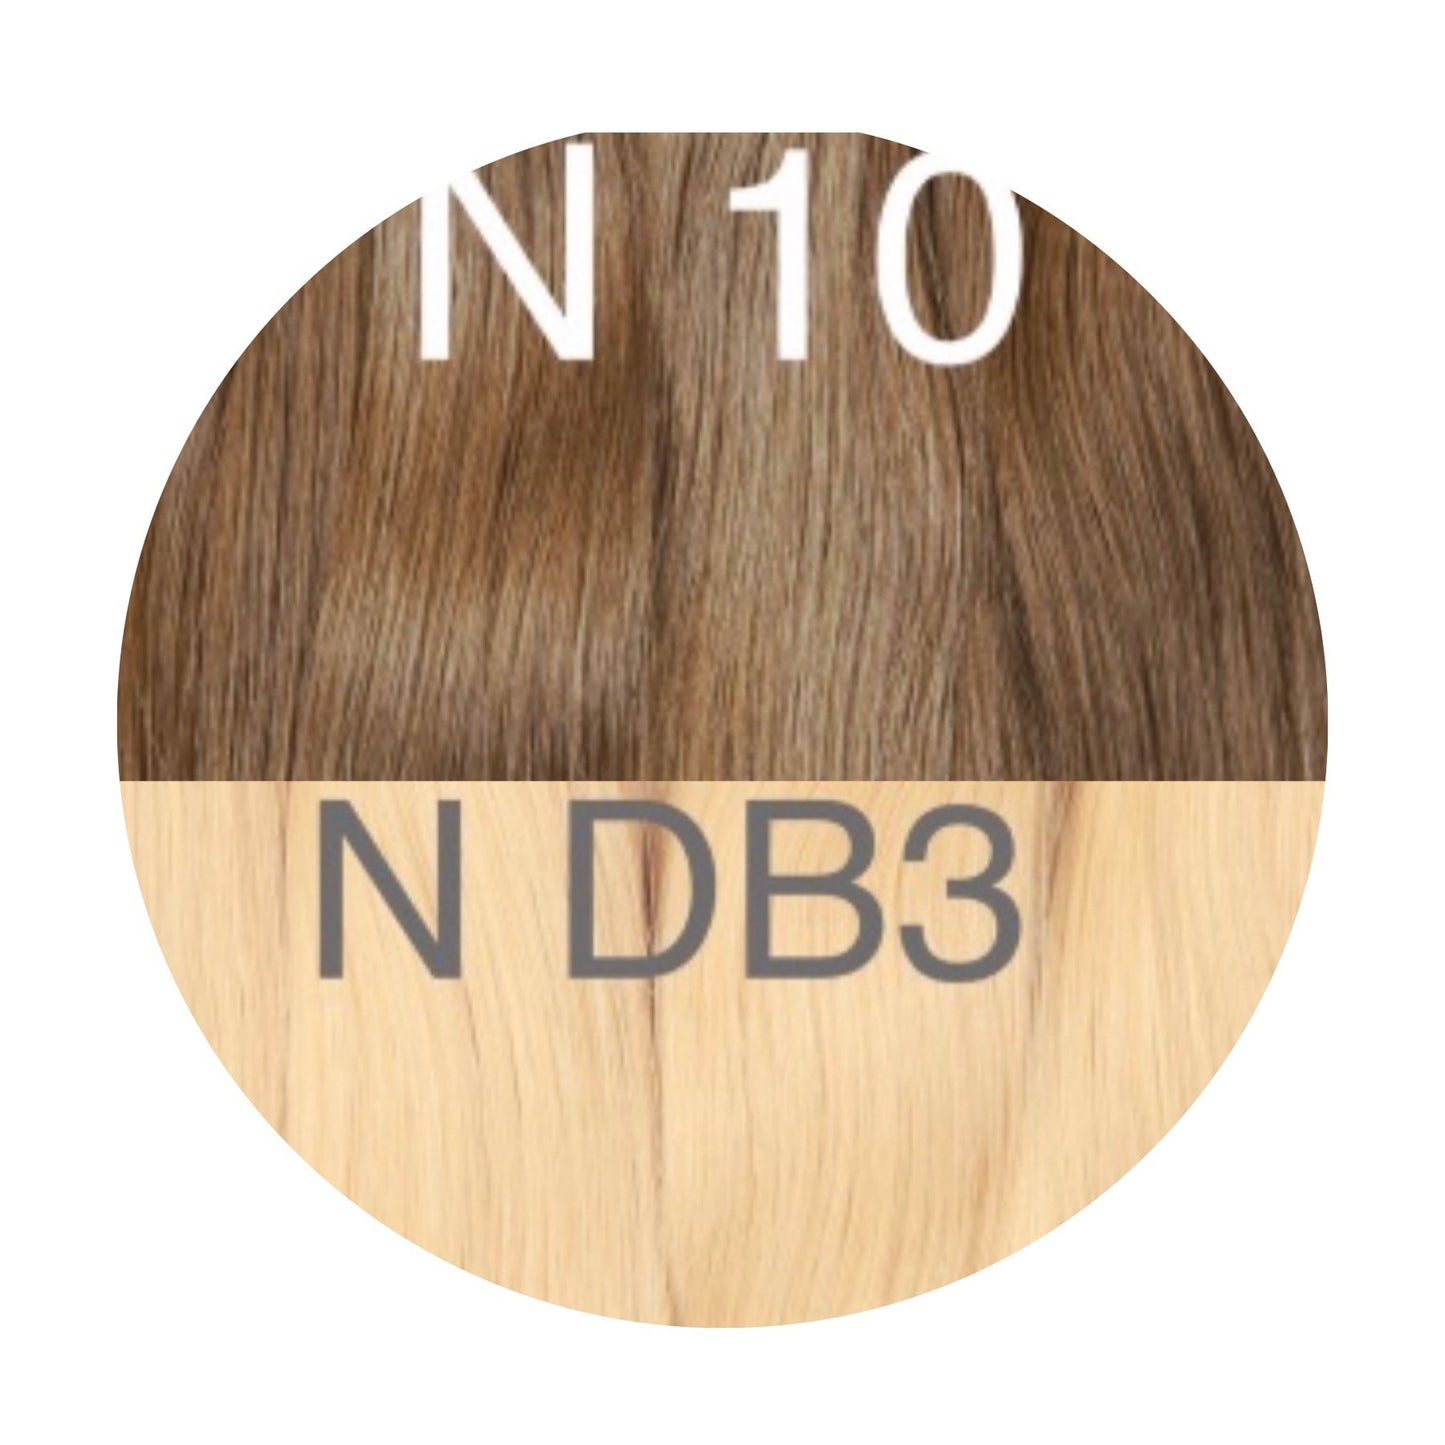 Wigs Ombre 10 and DB3 Color GVA hair_Retail price - GVA hair